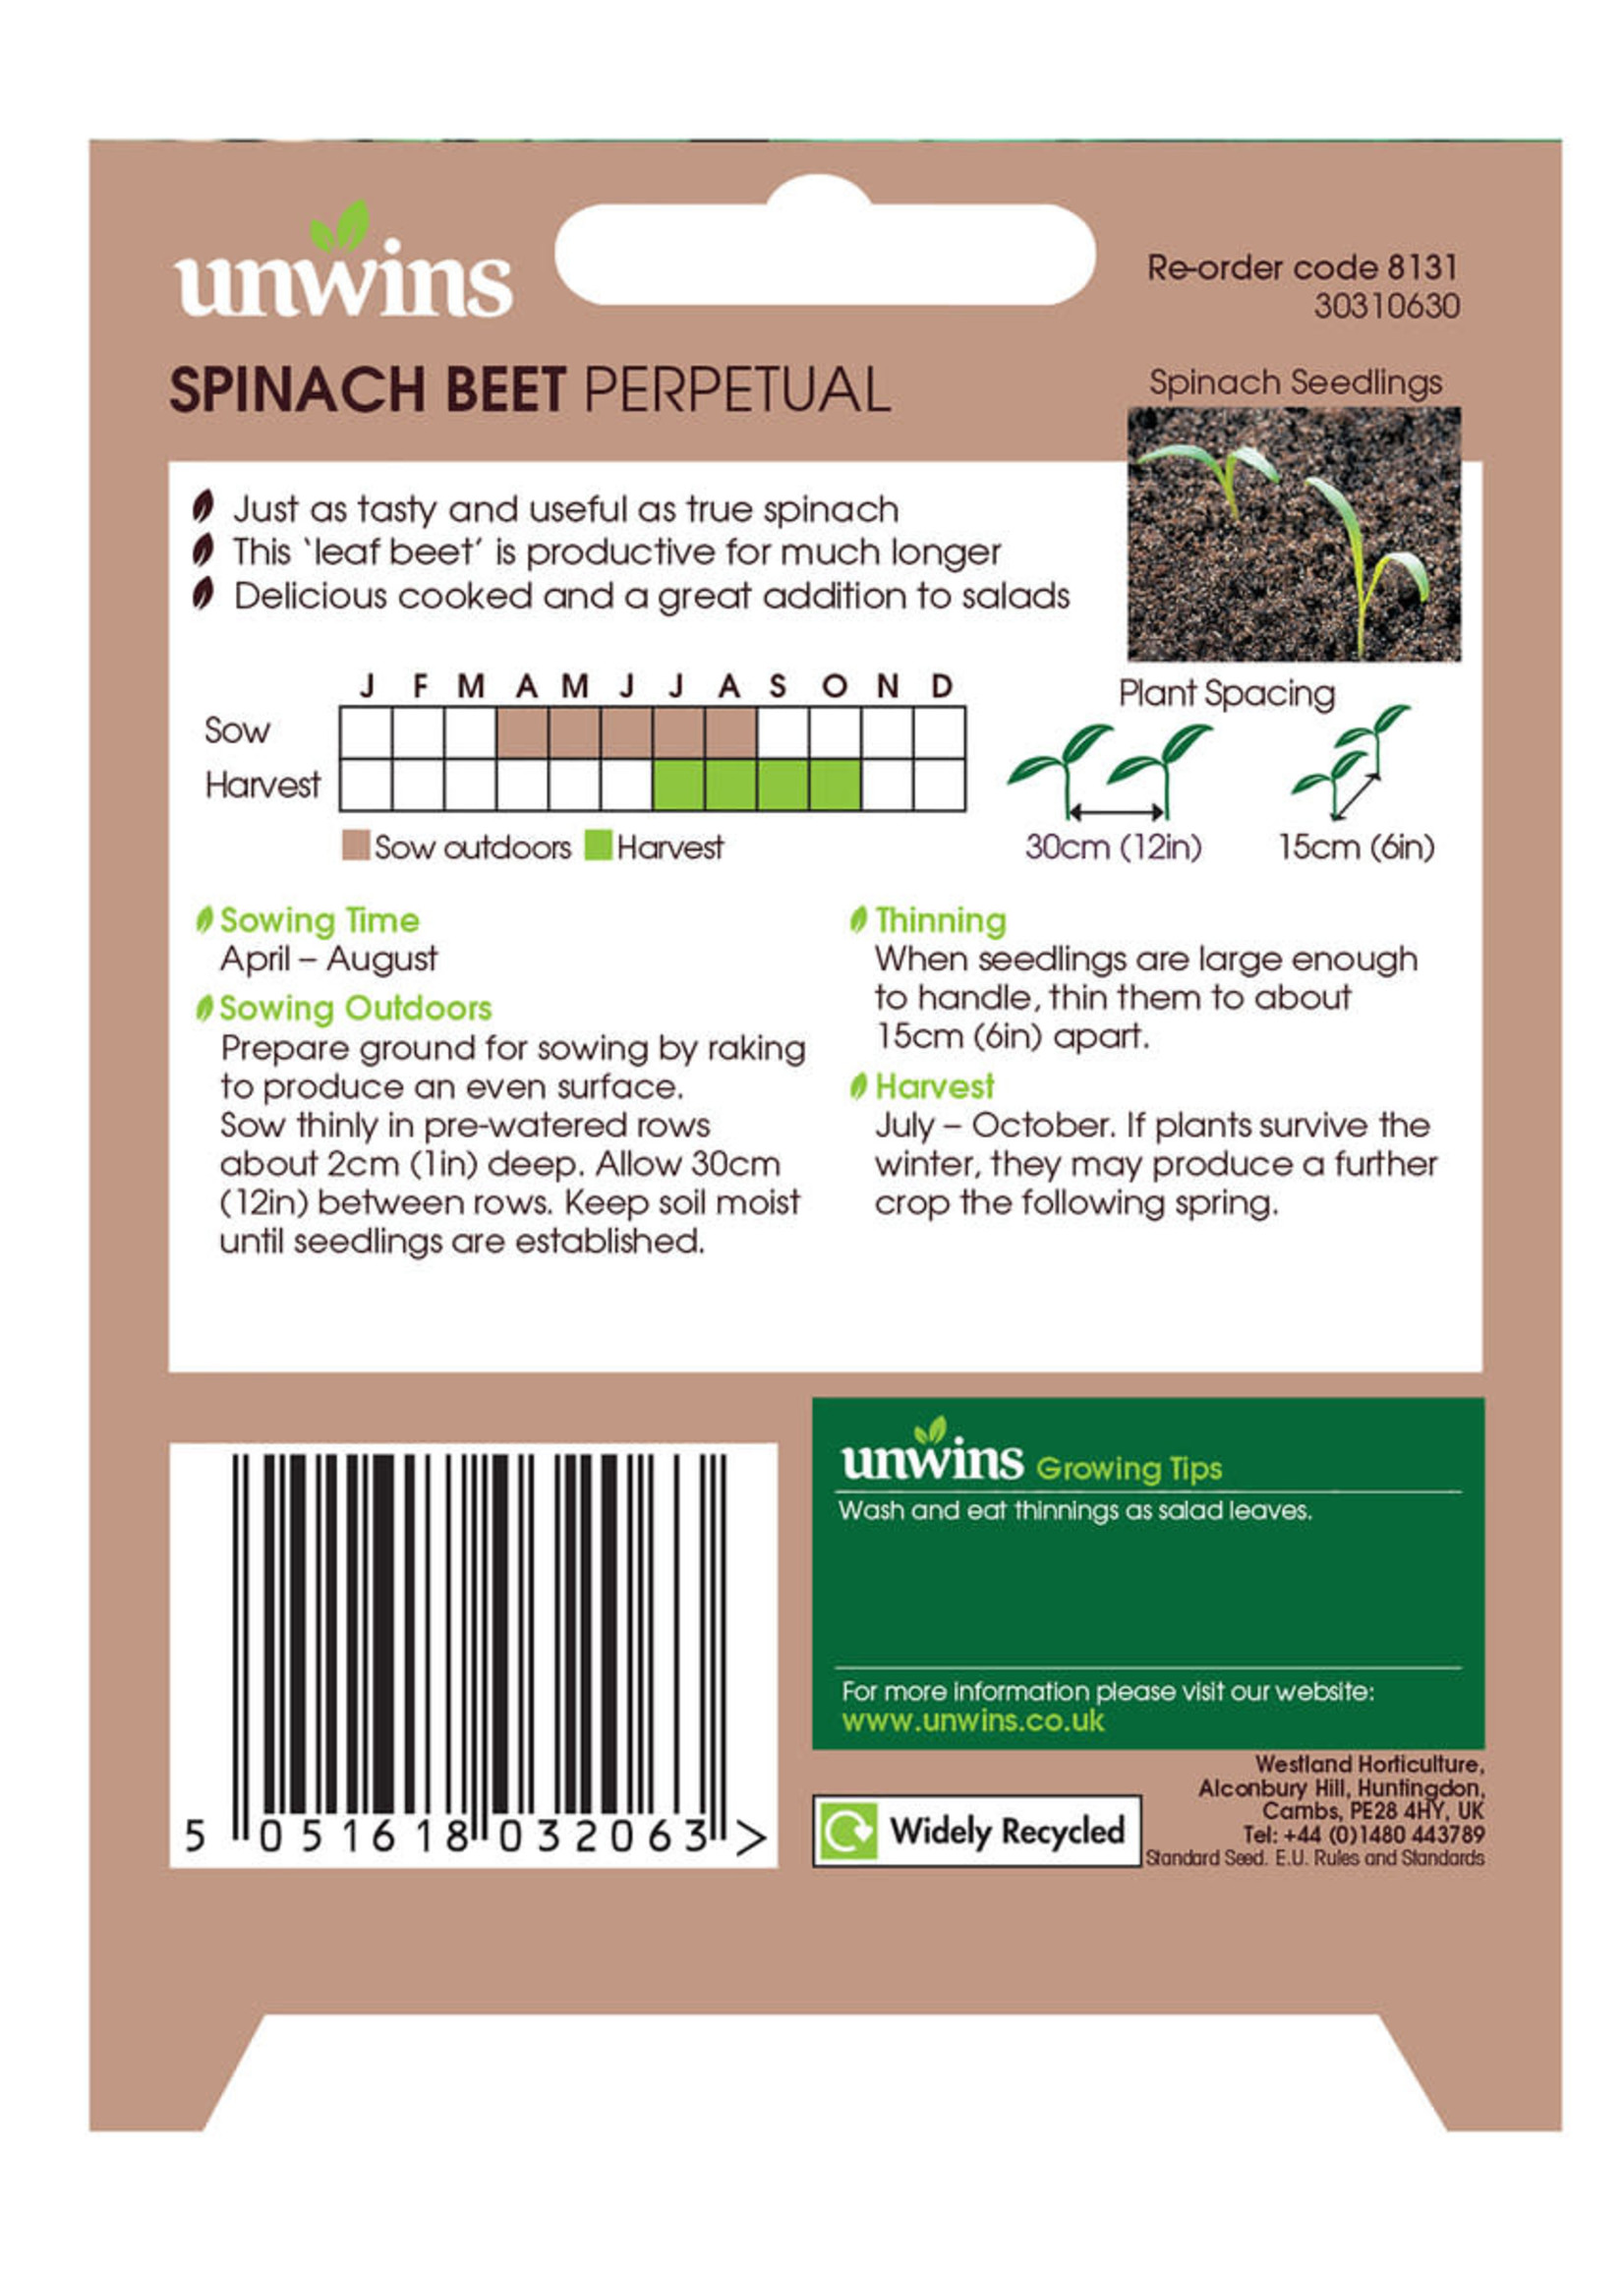 Unwins Spinach Beet - Perpetual